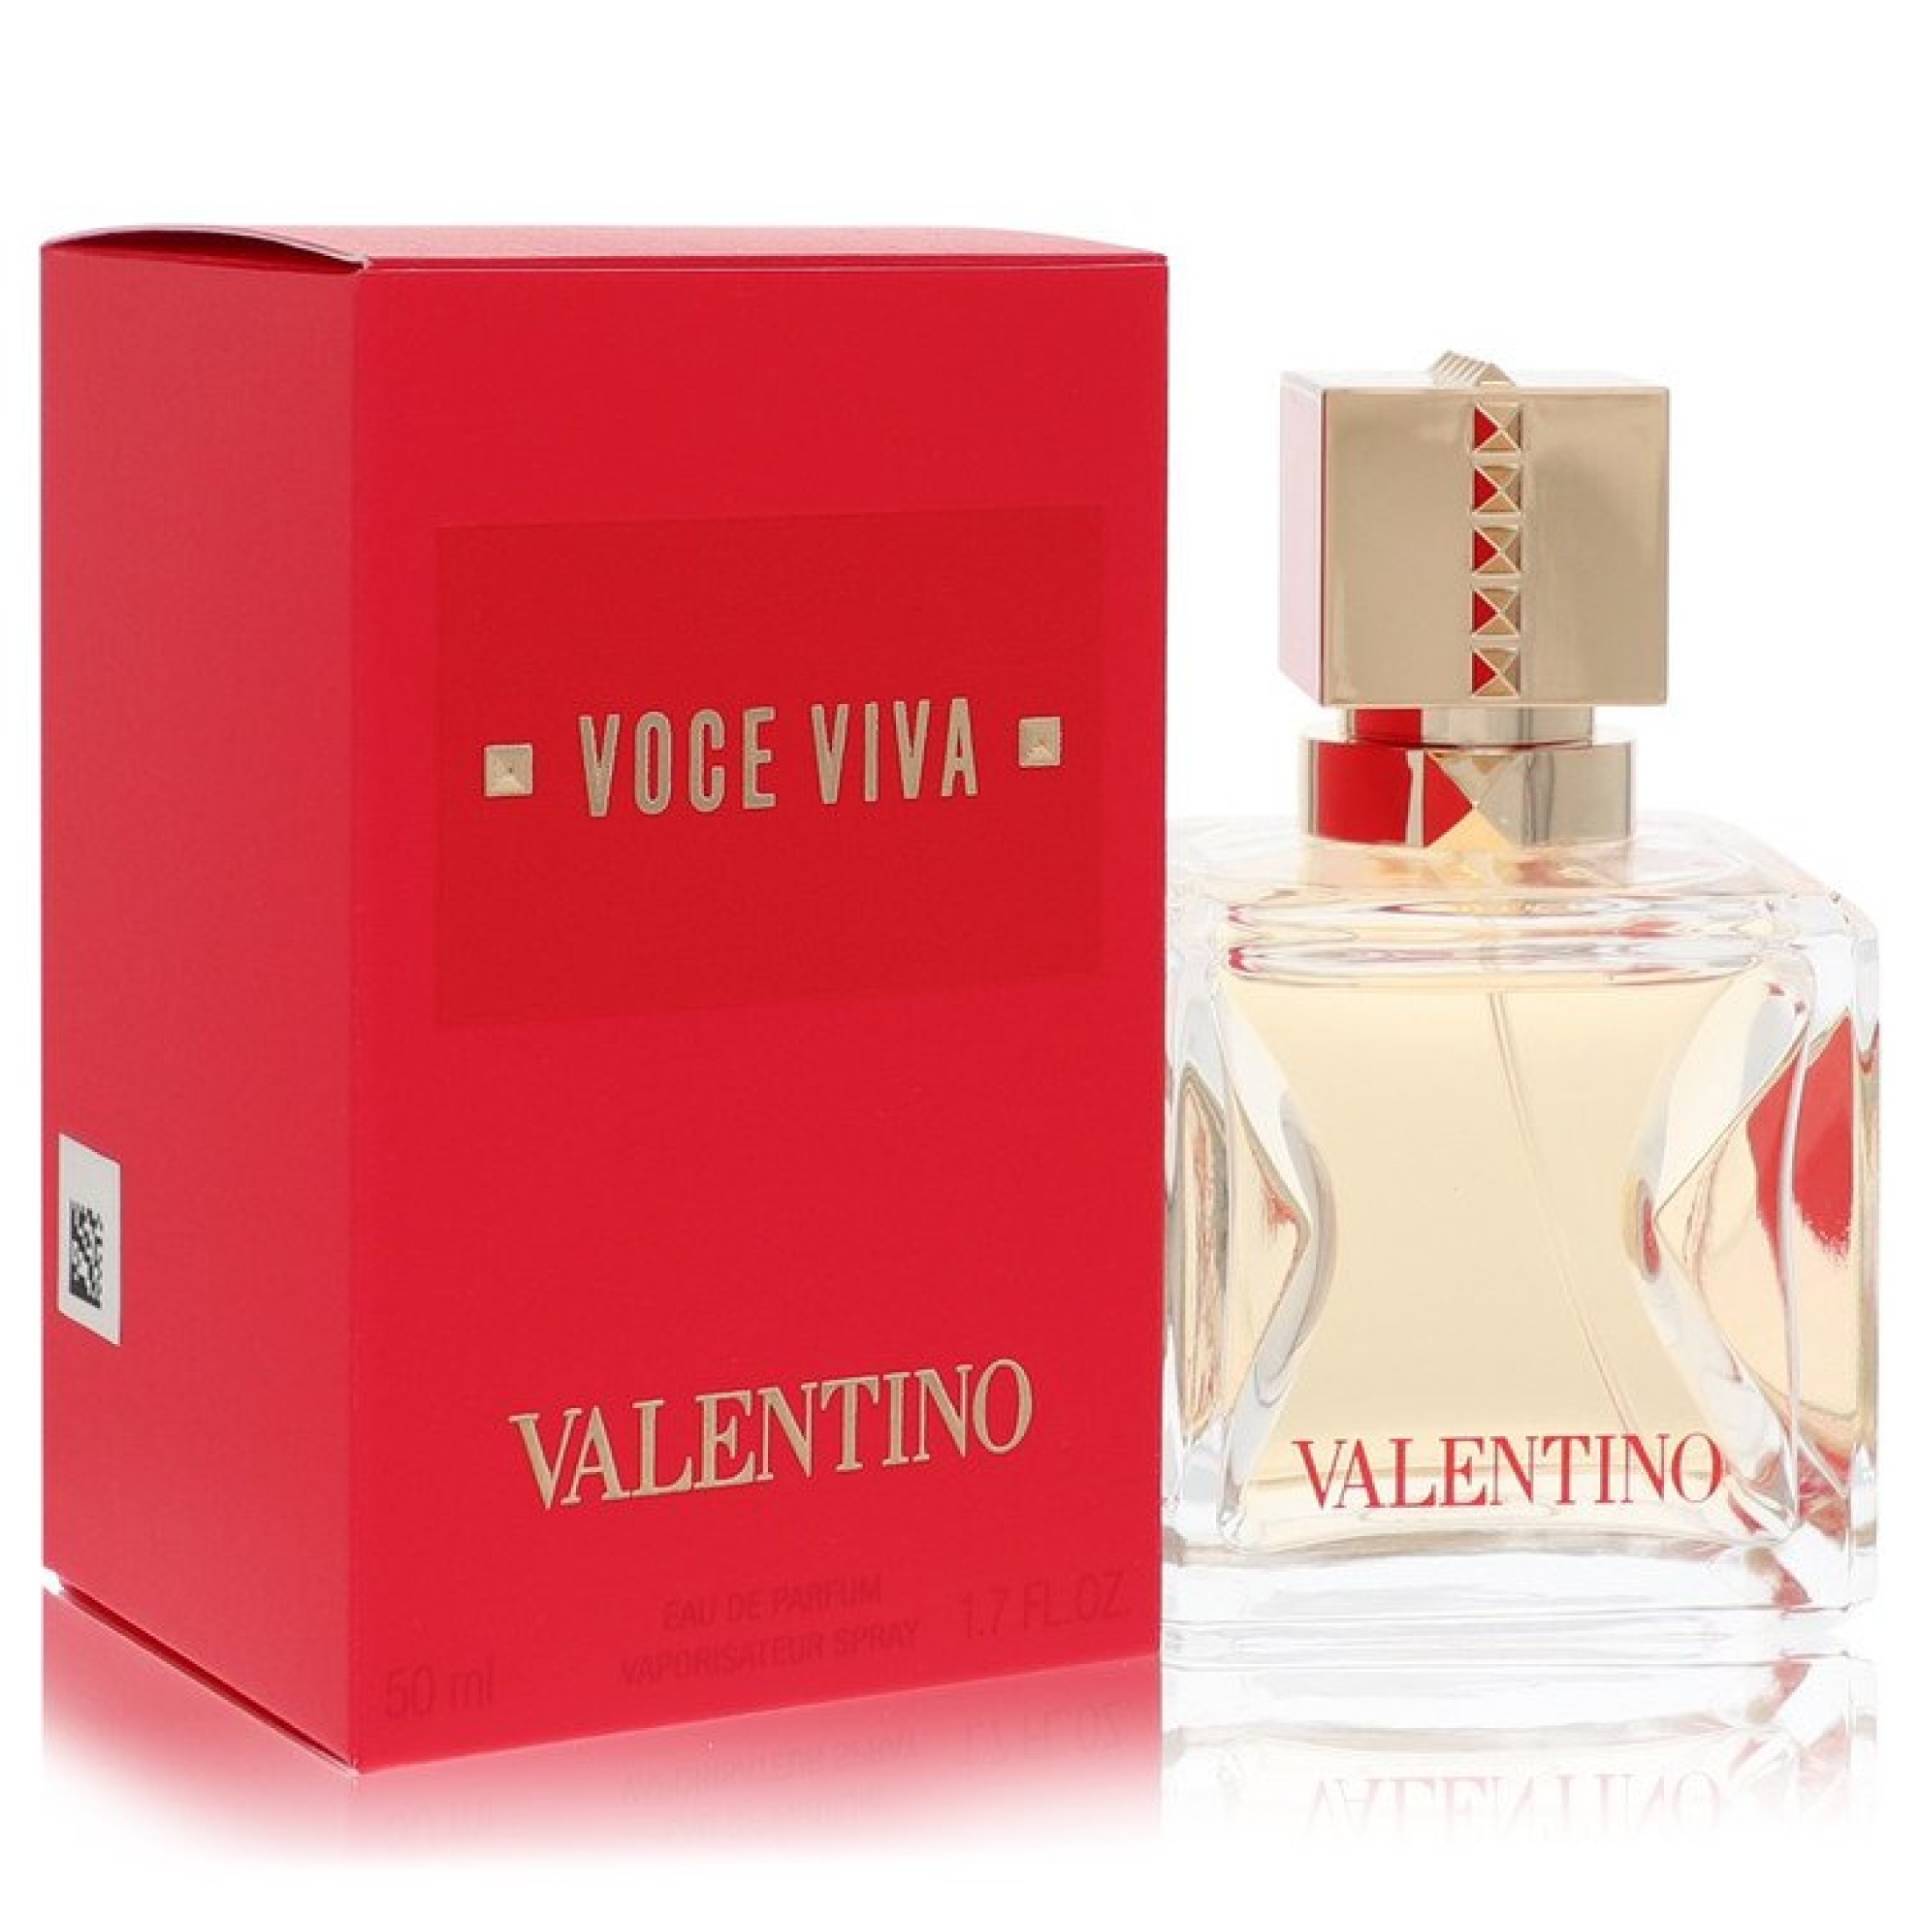 Valentino Voce Viva Eau De Parfum Spray 50 ml von Valentino